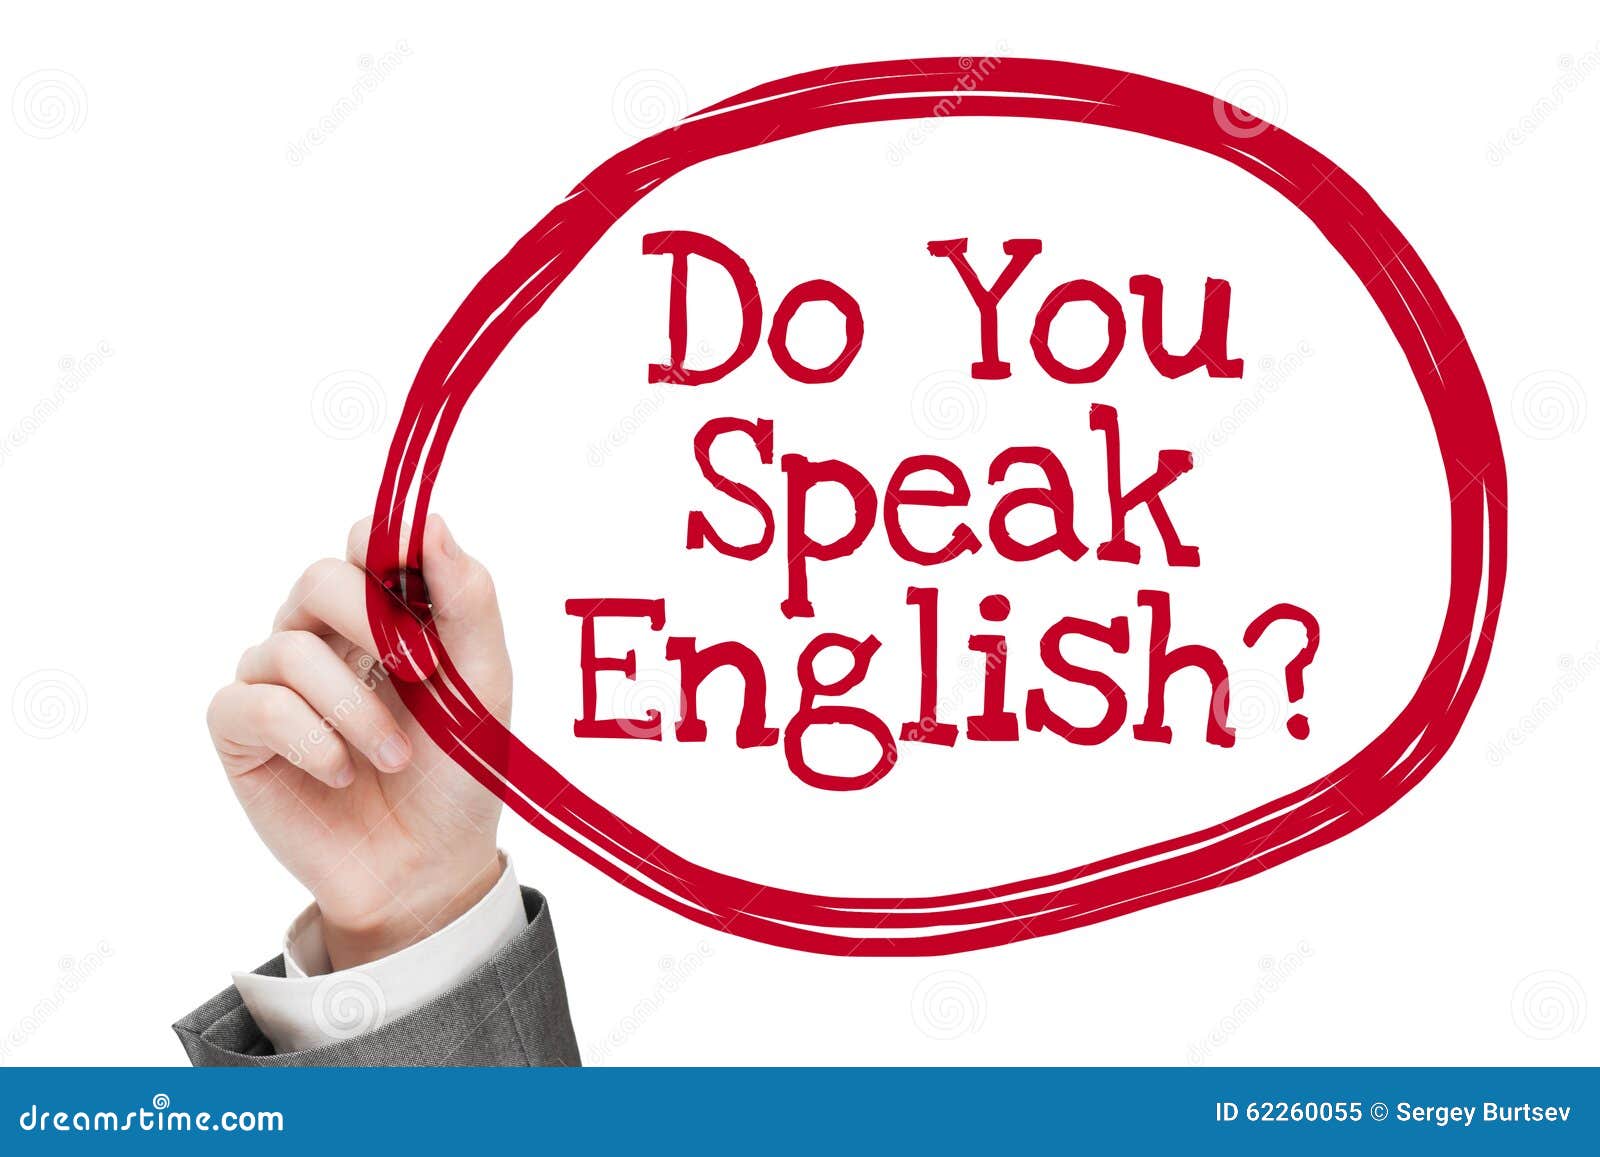 Do you speak english yes. Do you speak English картинки. Can you speak English.